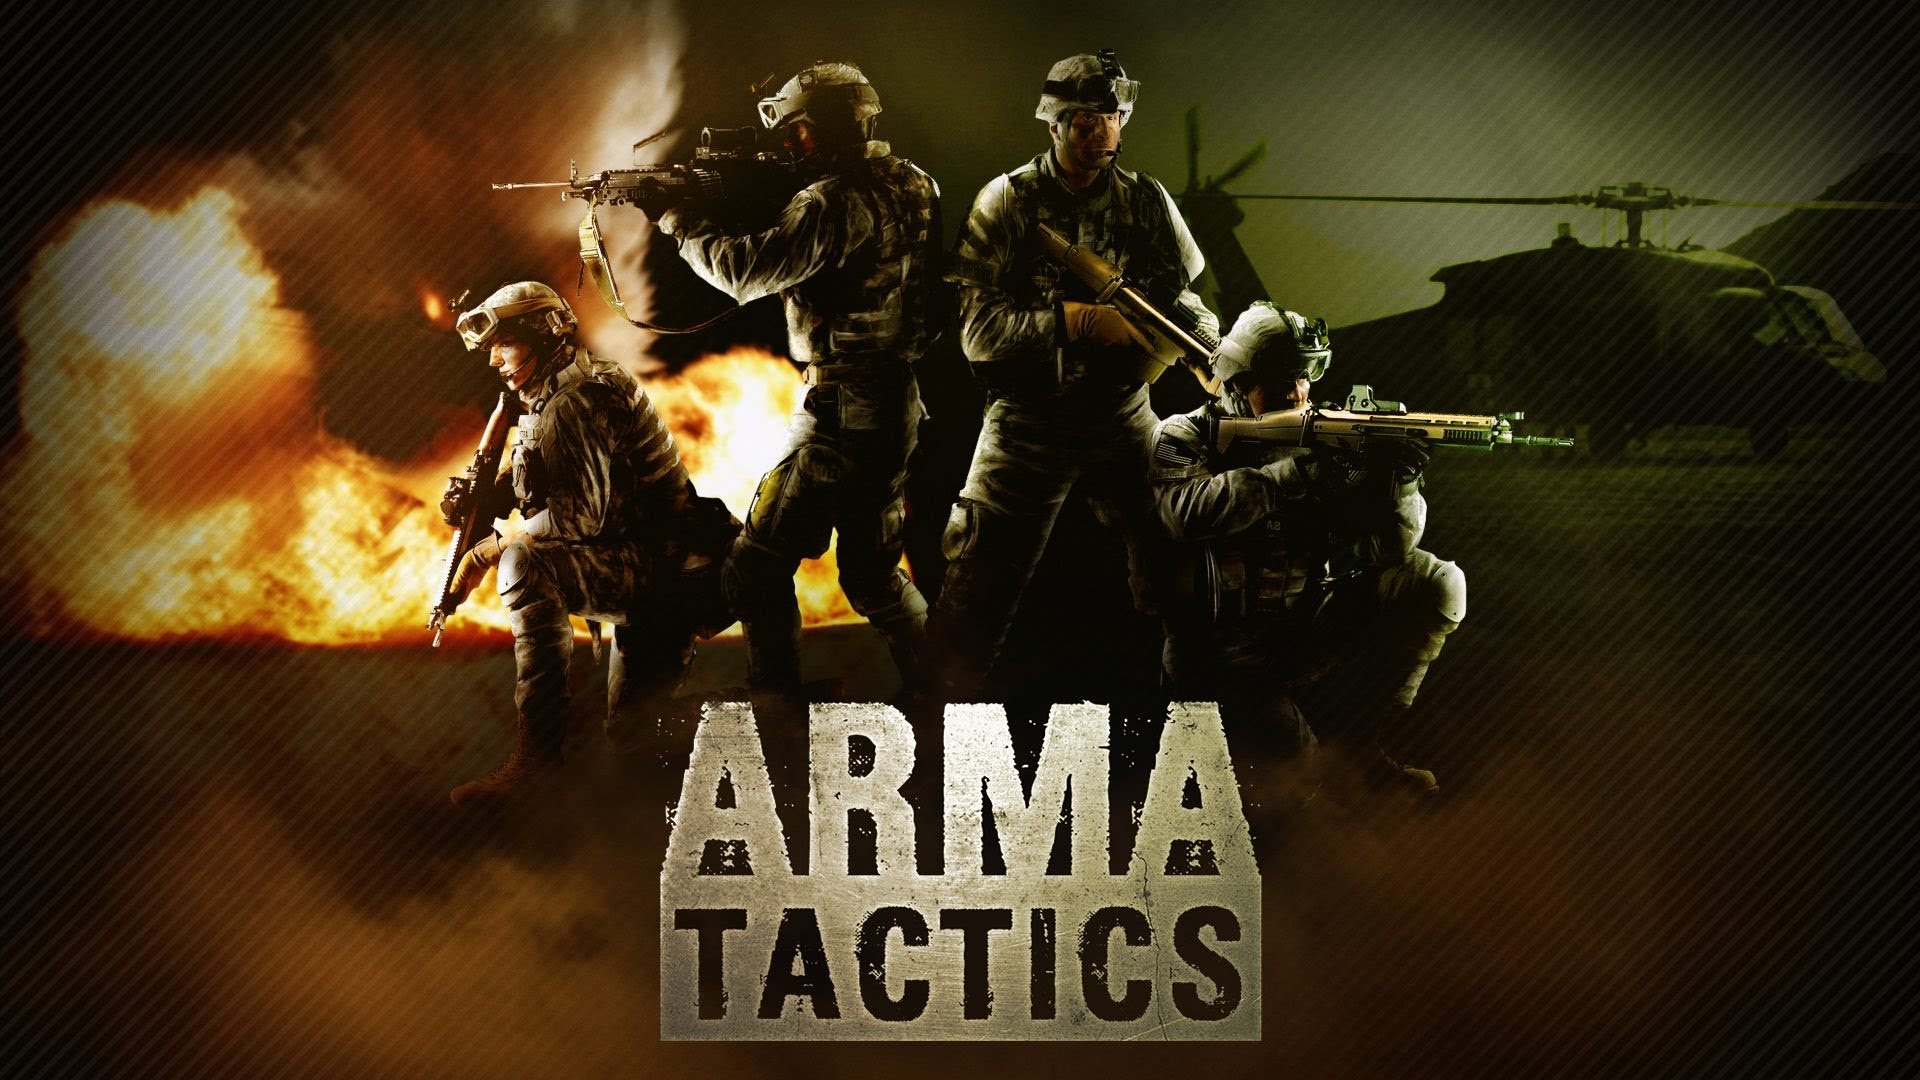 ARMA Tactics ( Steam Gift / Region Free ) HB link